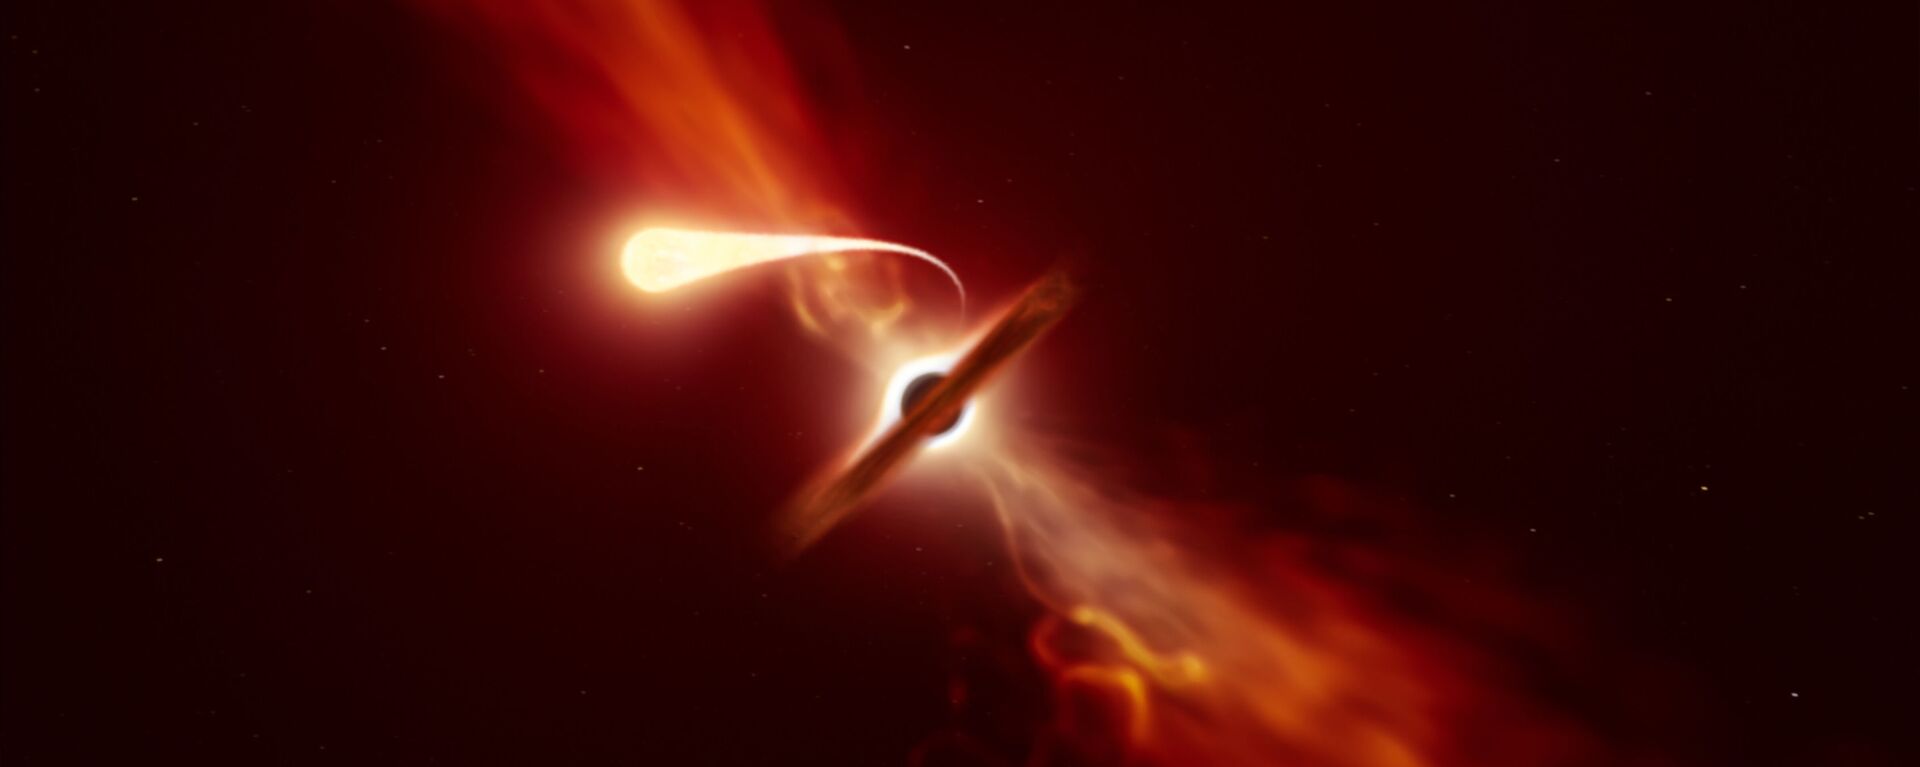 Imagen ilustrativa de un agujero negro supermasivo que devora a una estrella - Sputnik Mundo, 1920, 13.10.2020